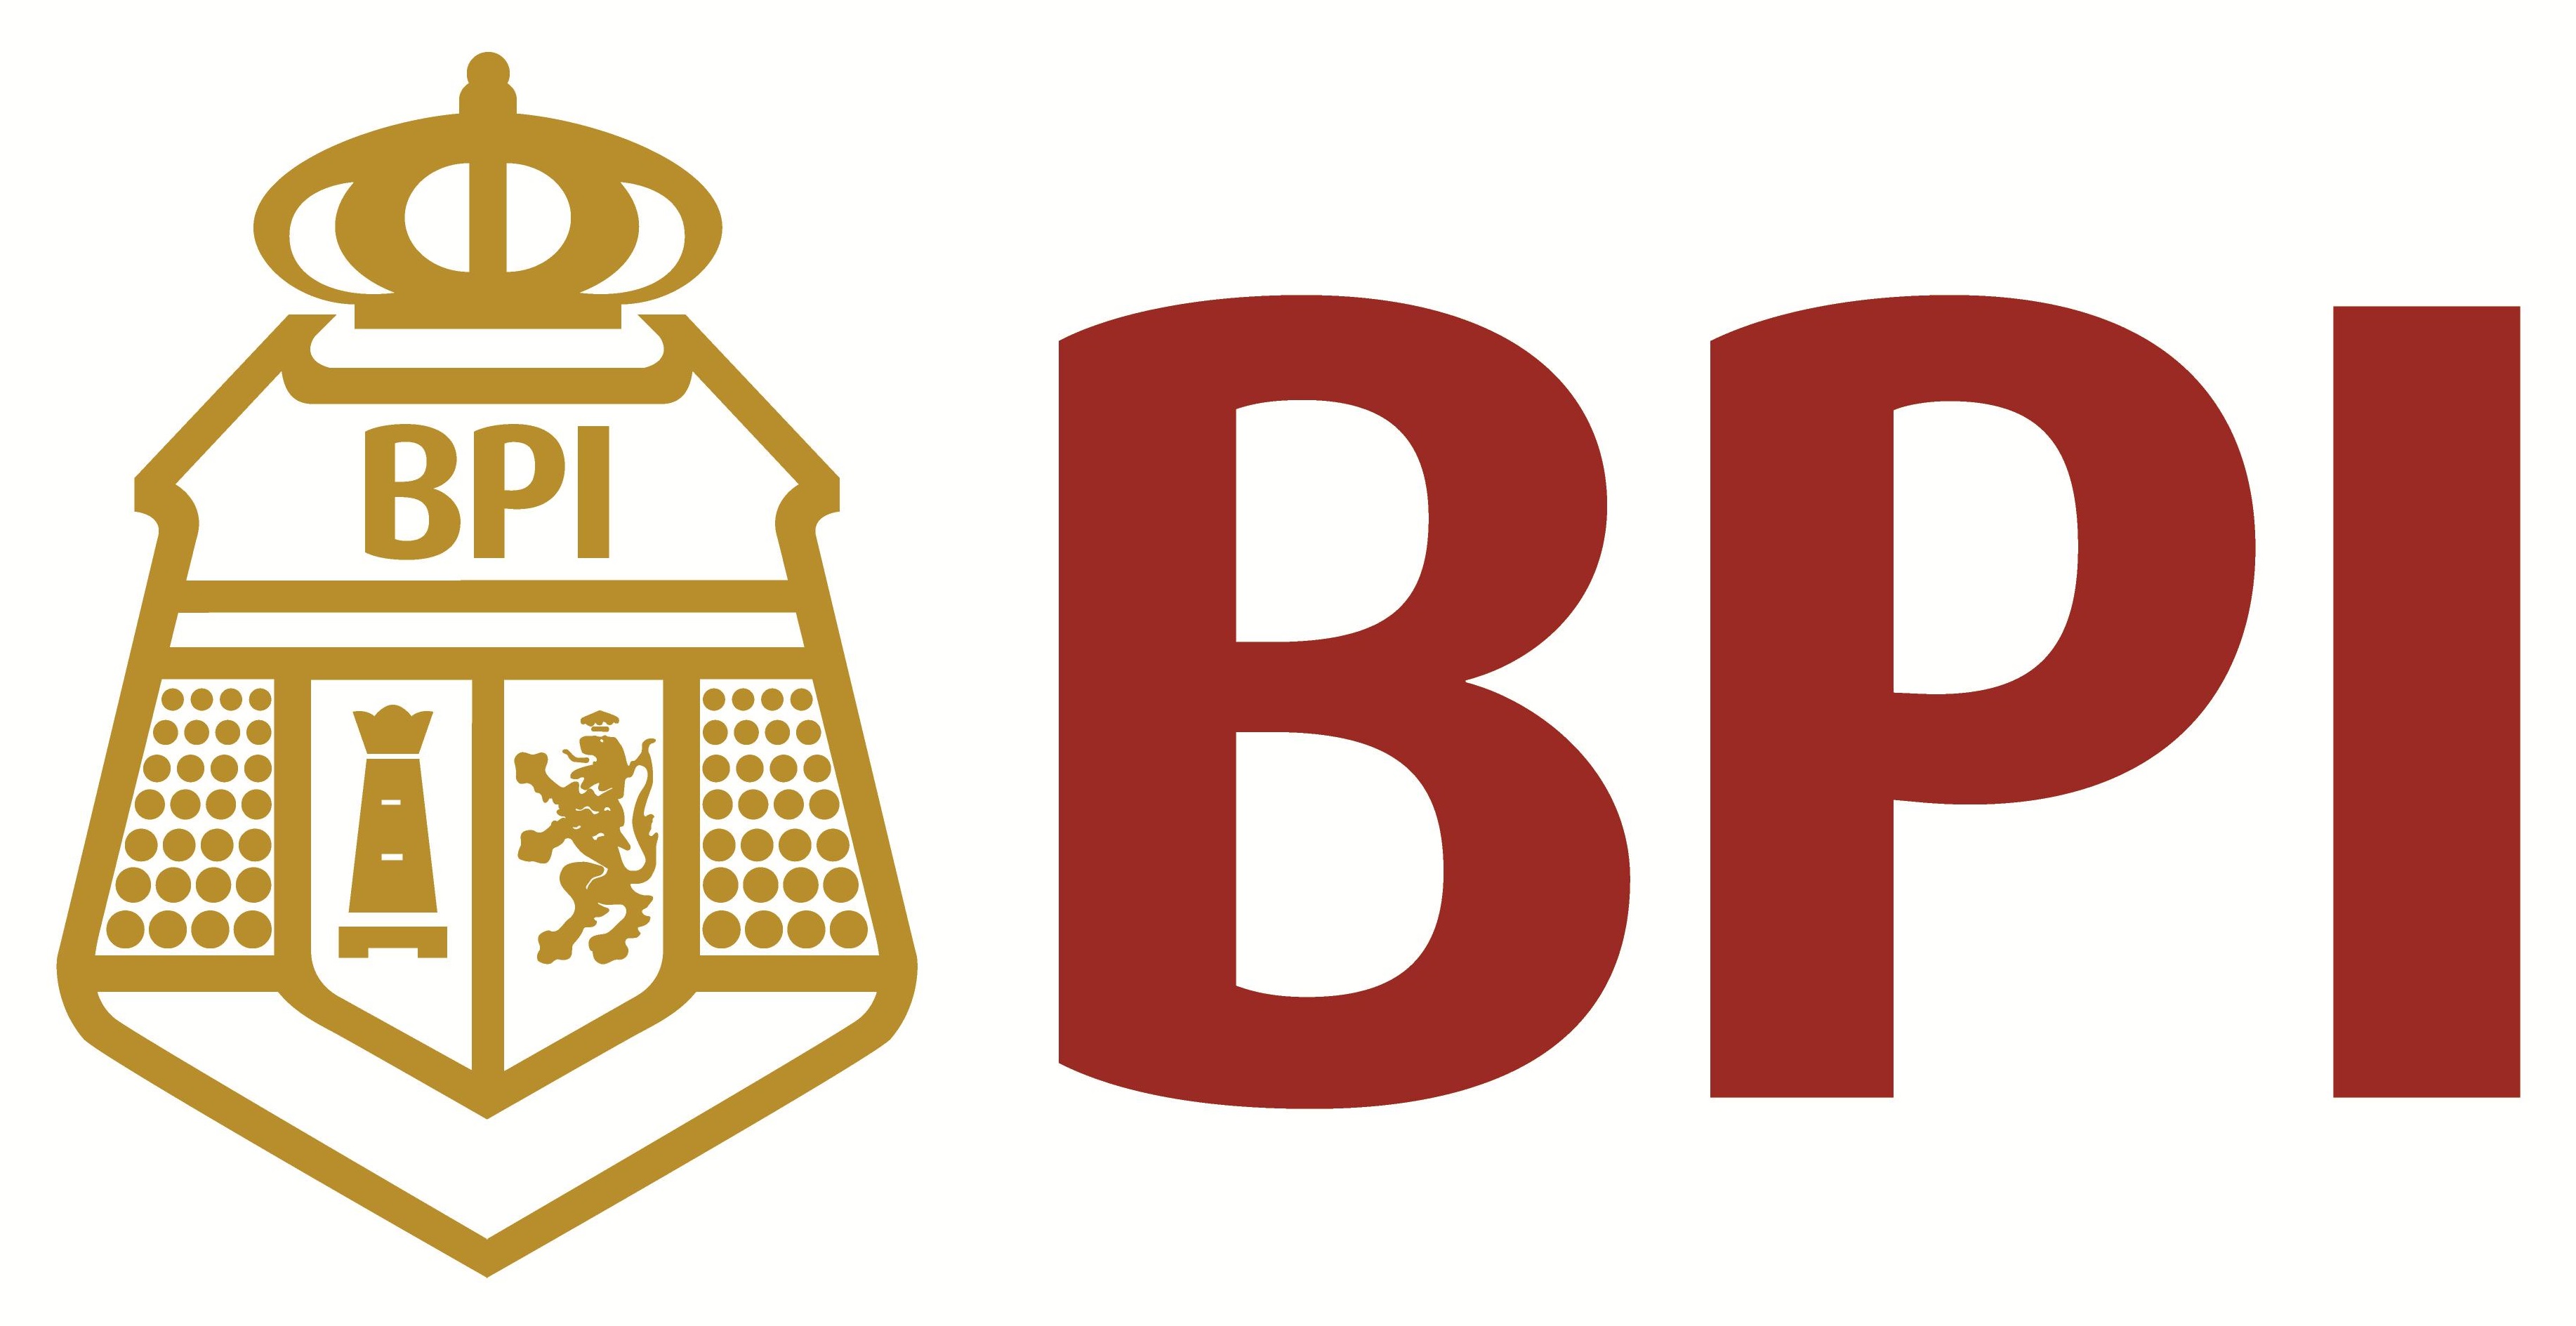 Bank of the Philippine Islands Brand Logo